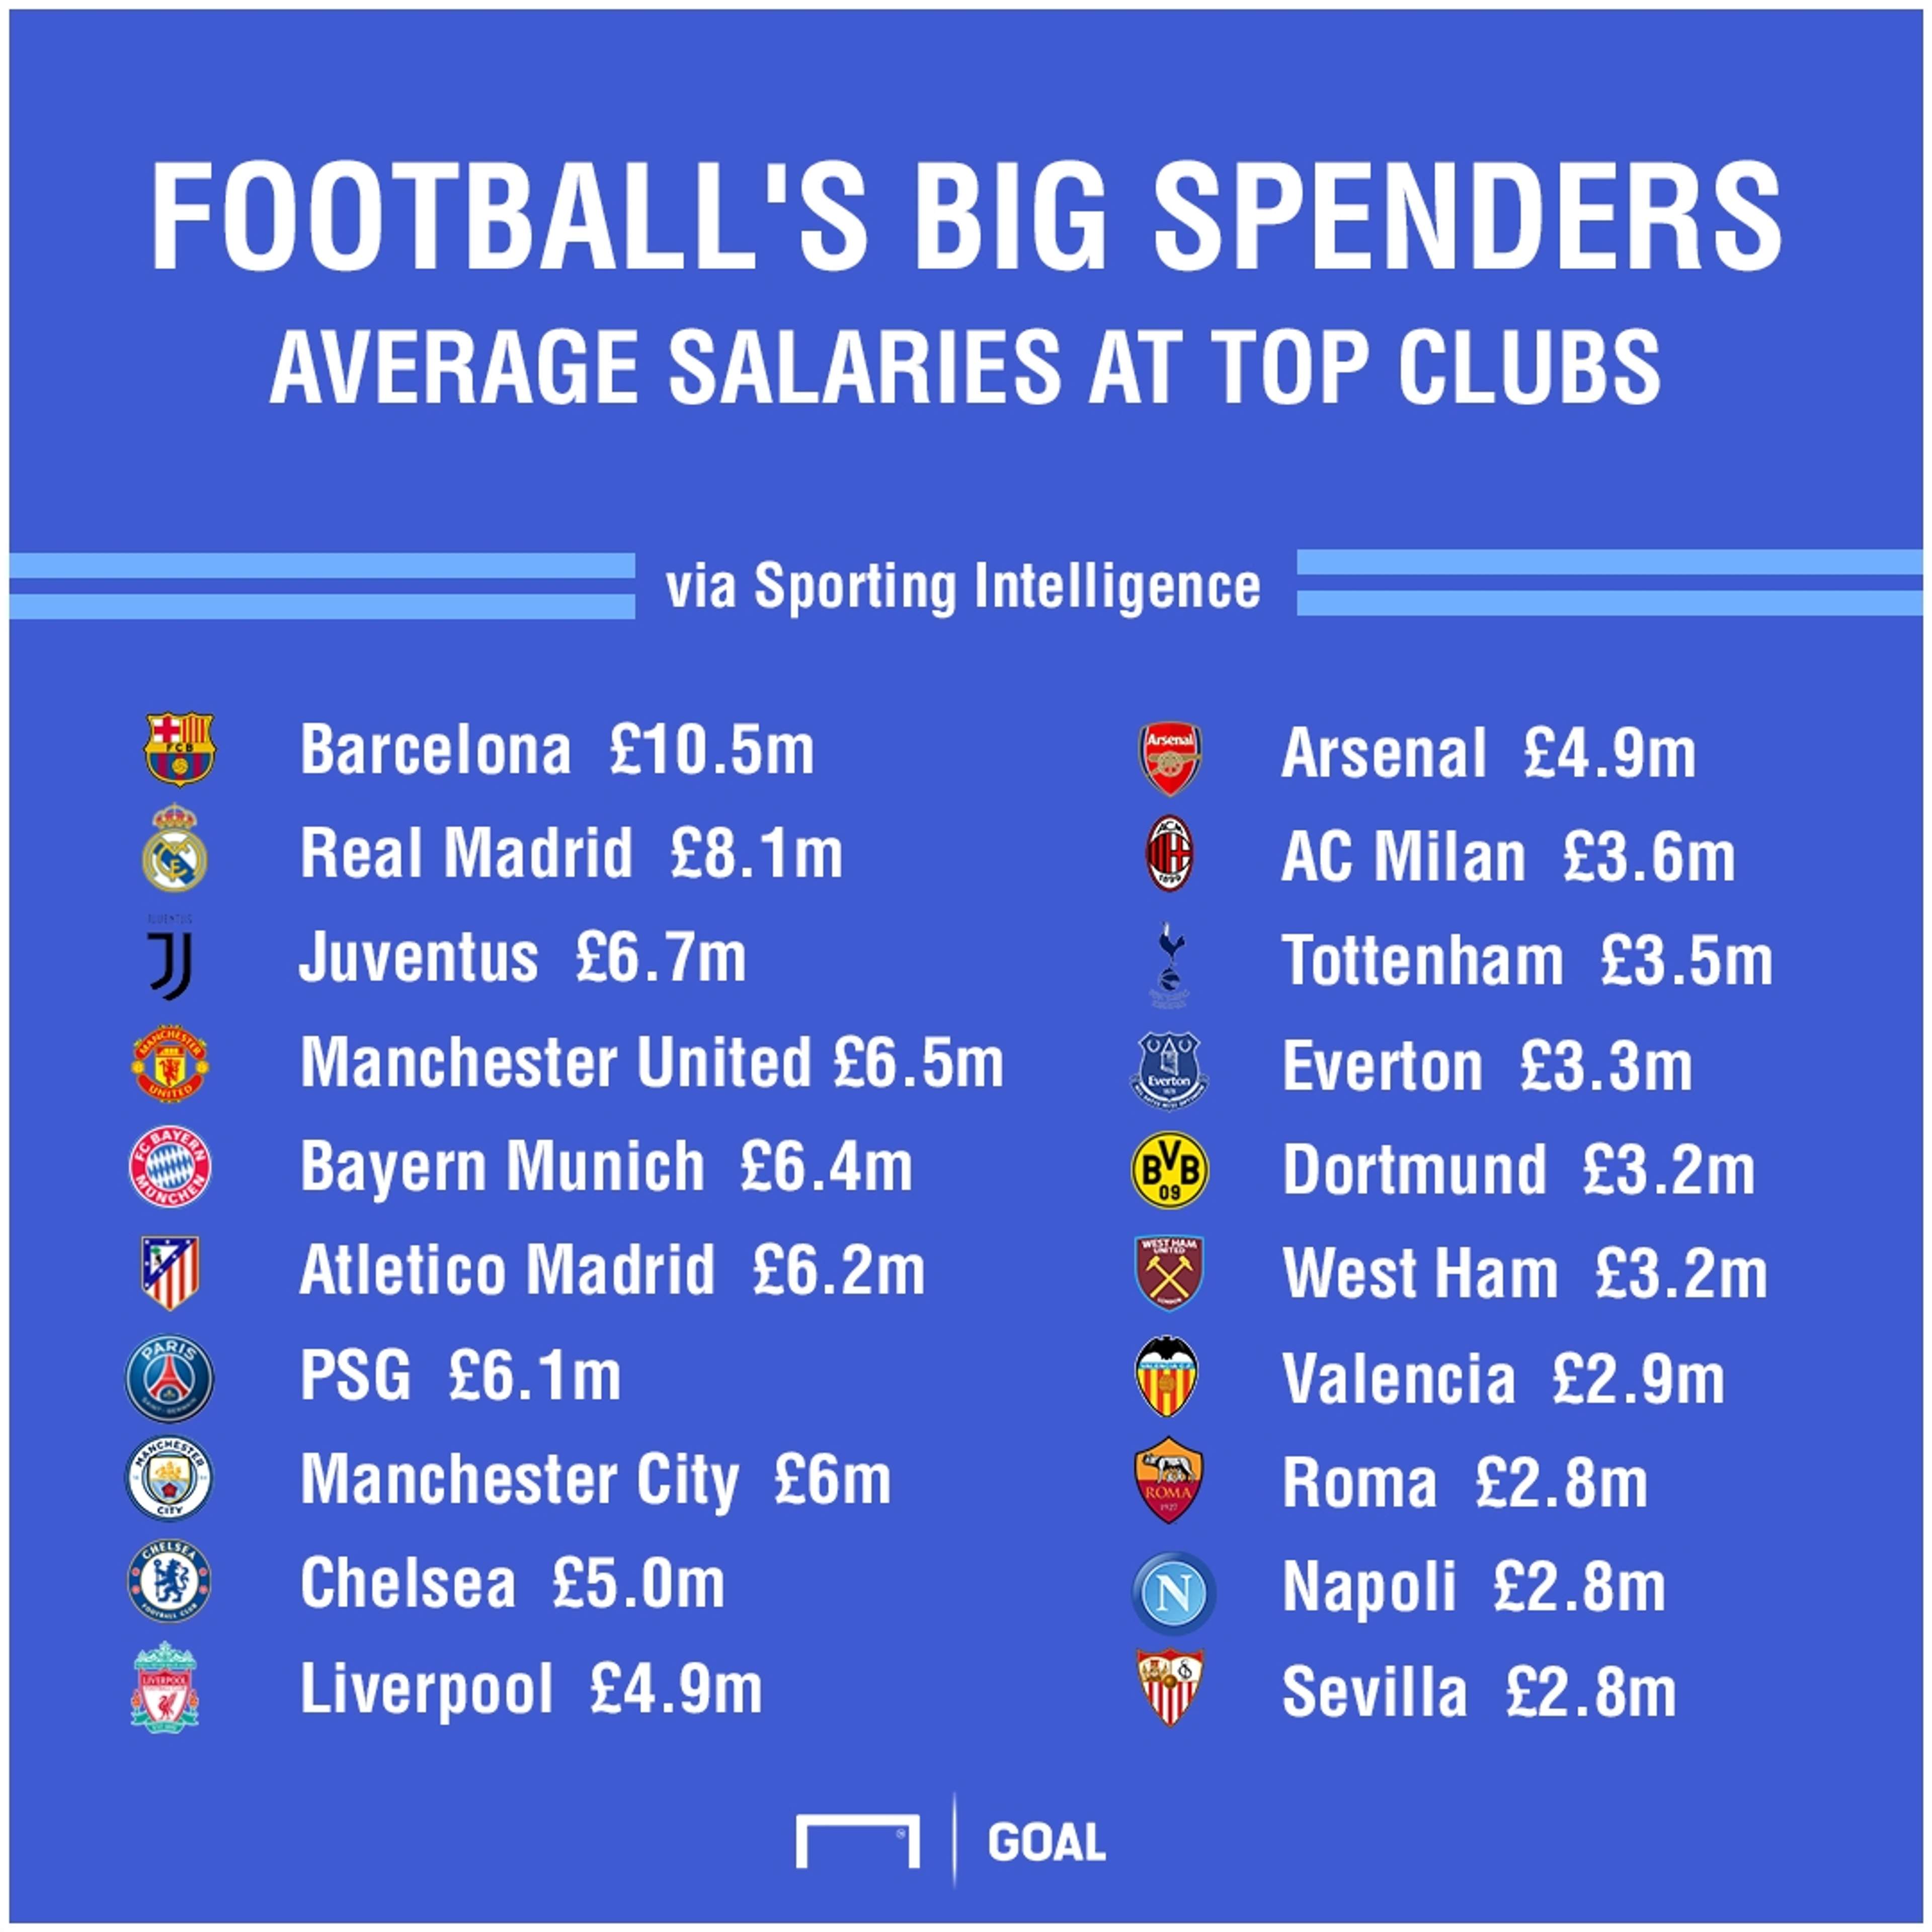 2018 Global Sports Salaries Survey - Top Football Clubs